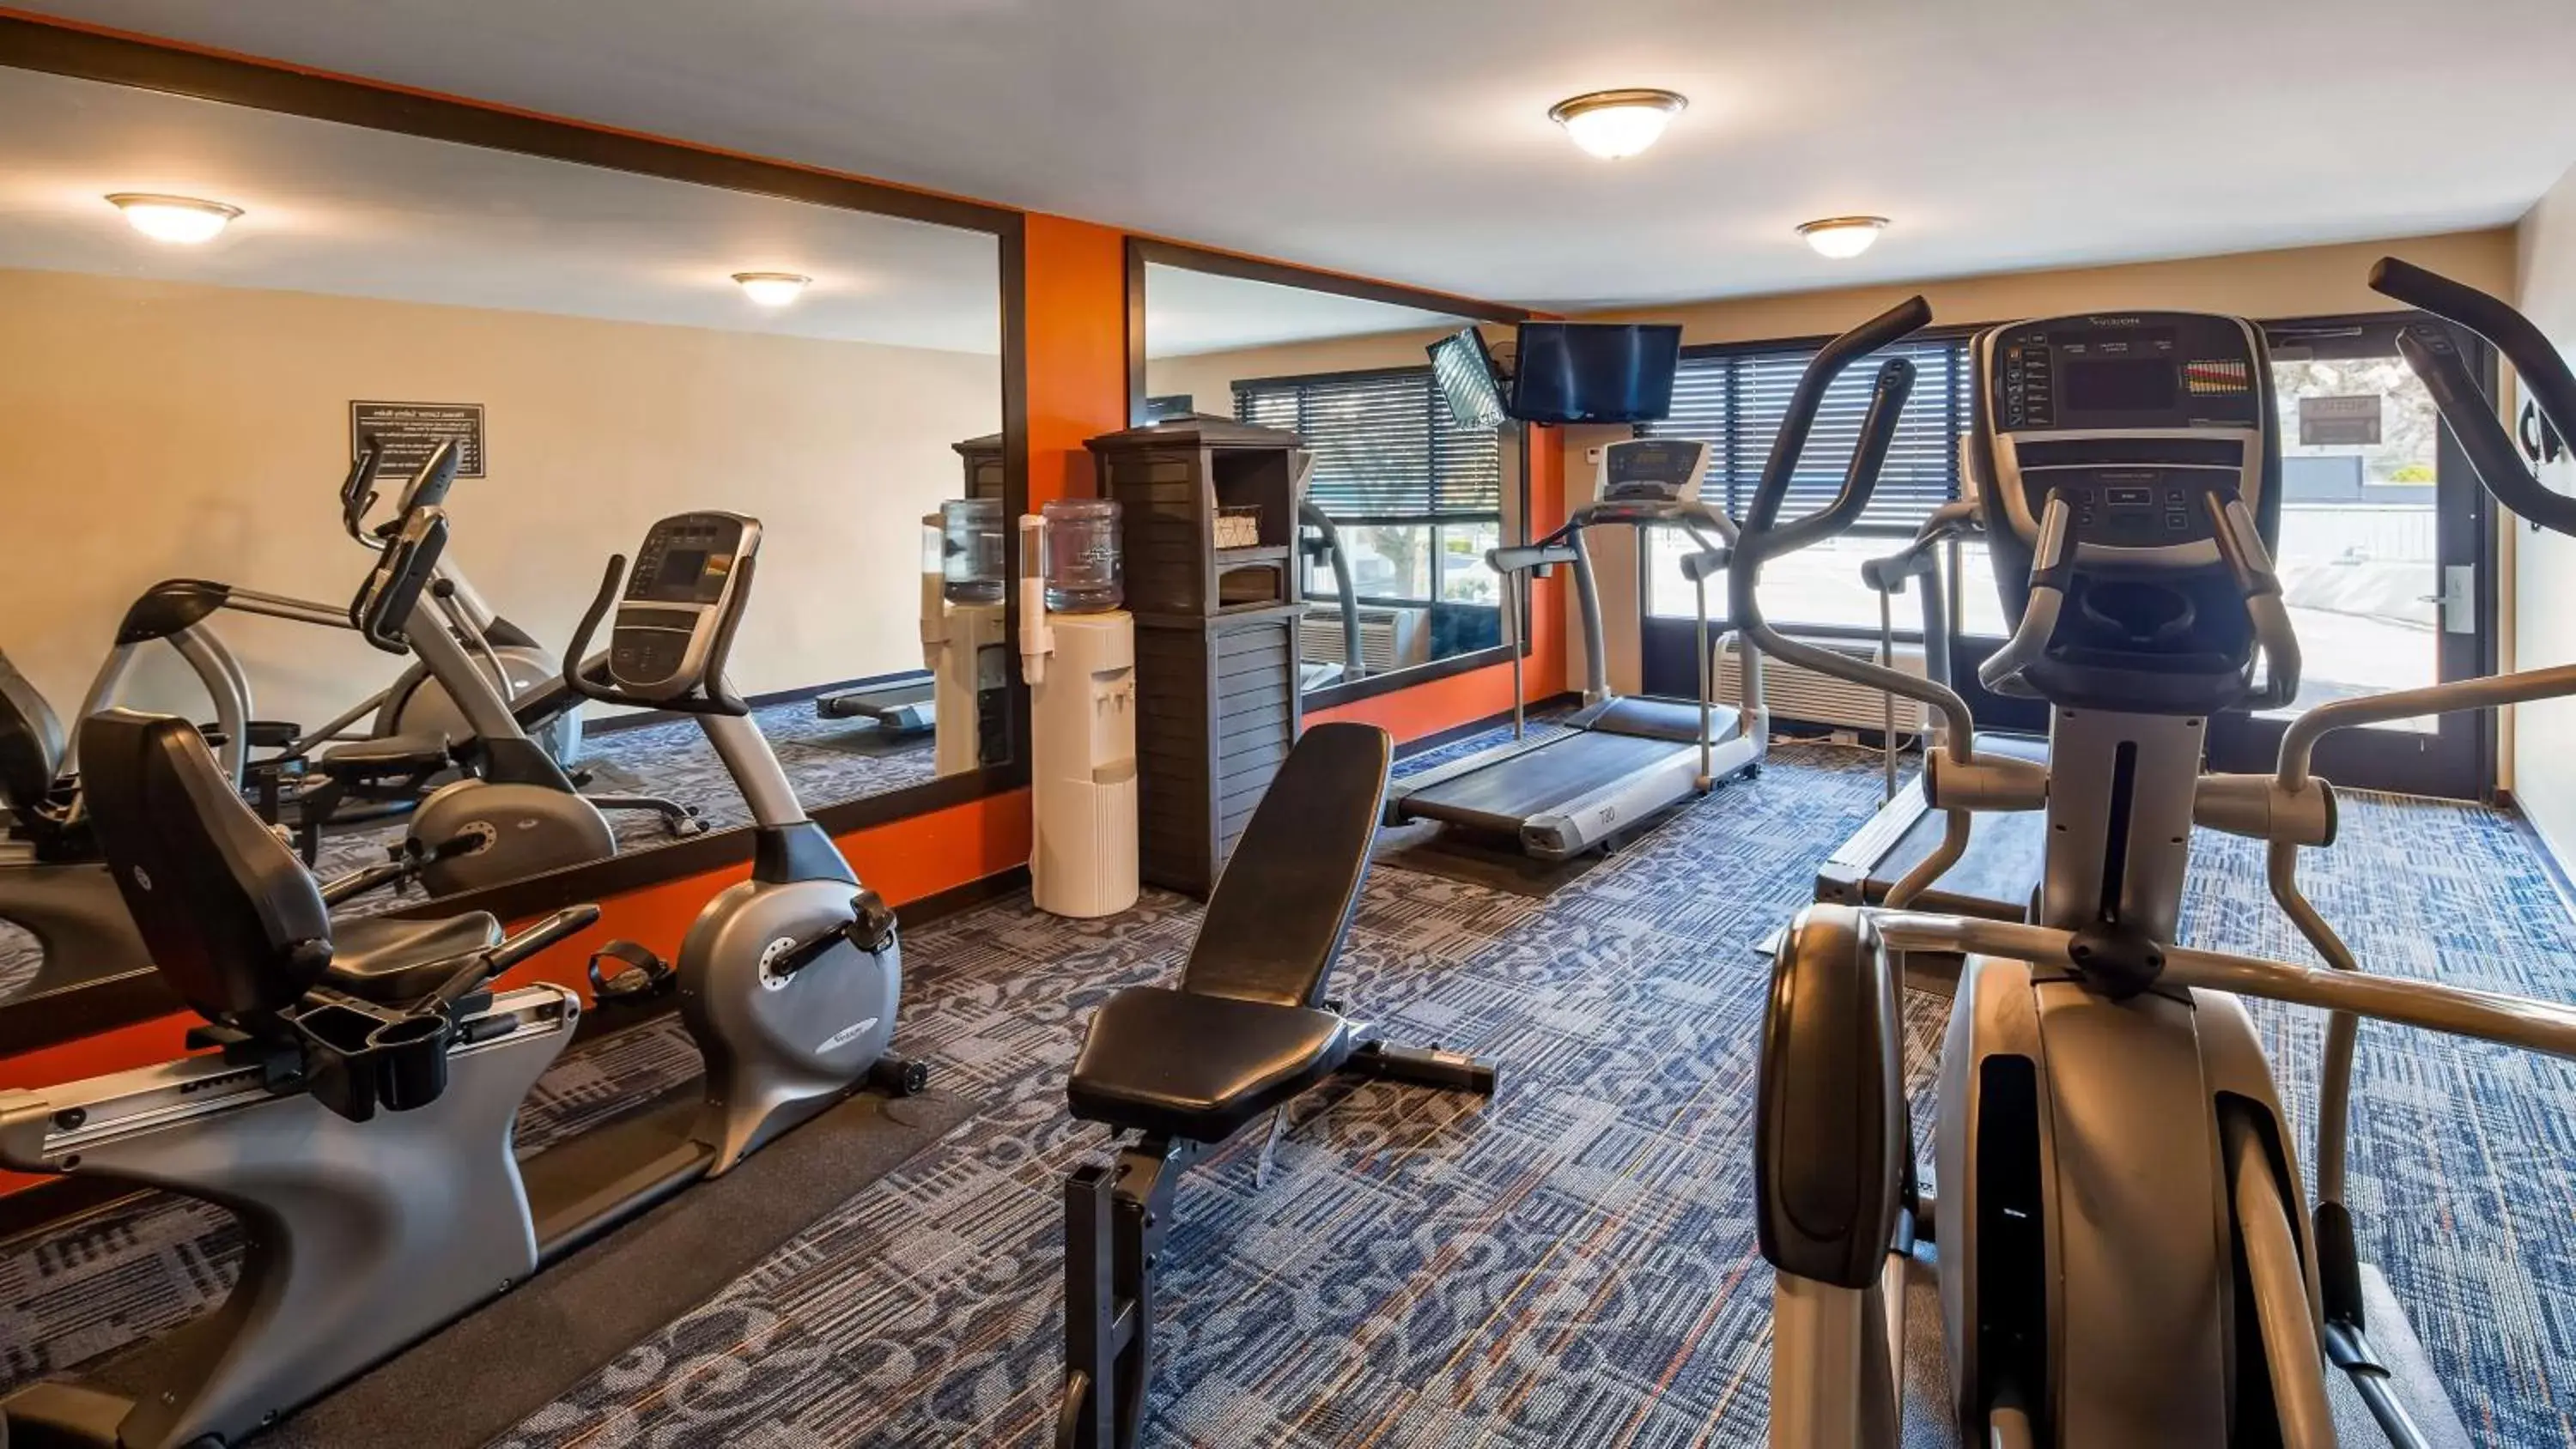 Fitness centre/facilities, Fitness Center/Facilities in Best Western Newport Inn